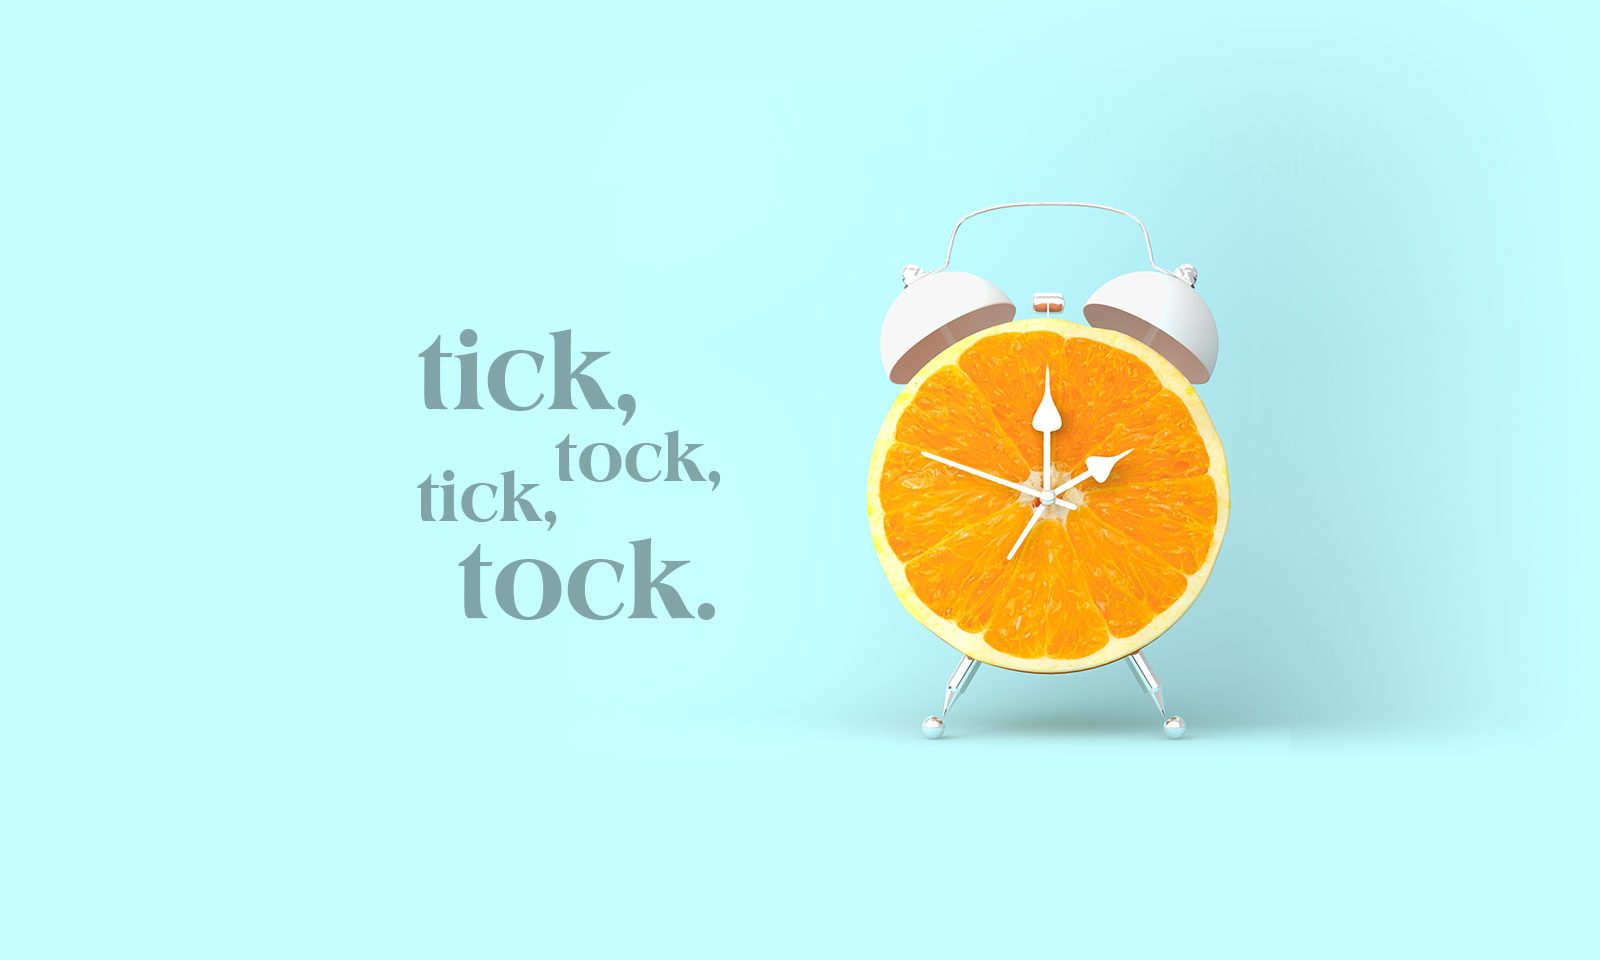 Tick-tock